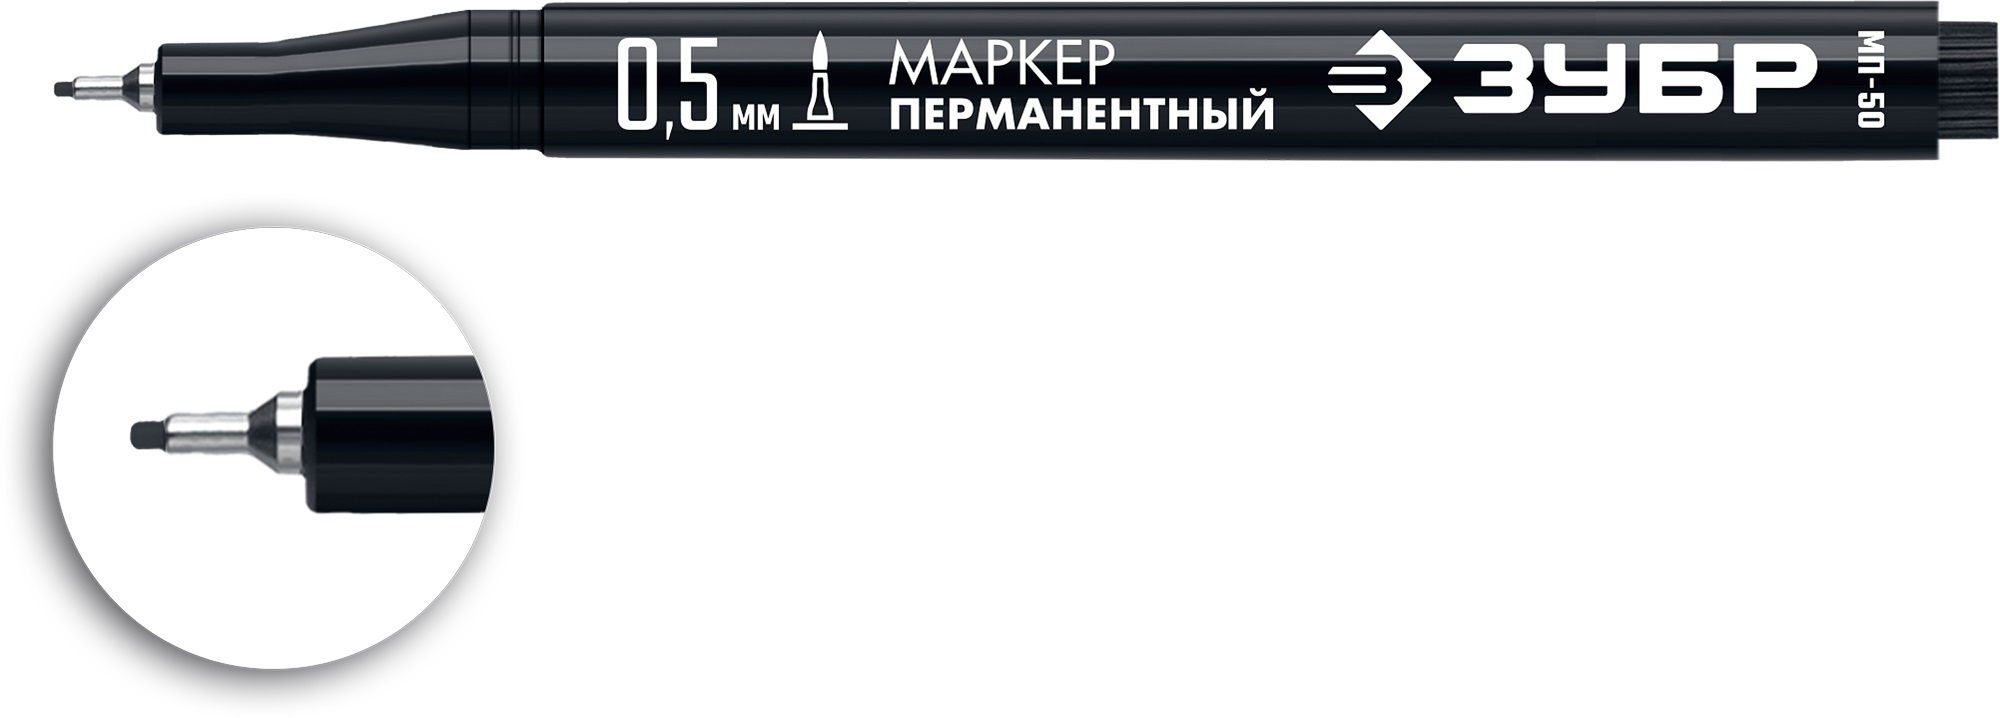 Маркер Зубр МП-50 черный 0,5мм 06321-2